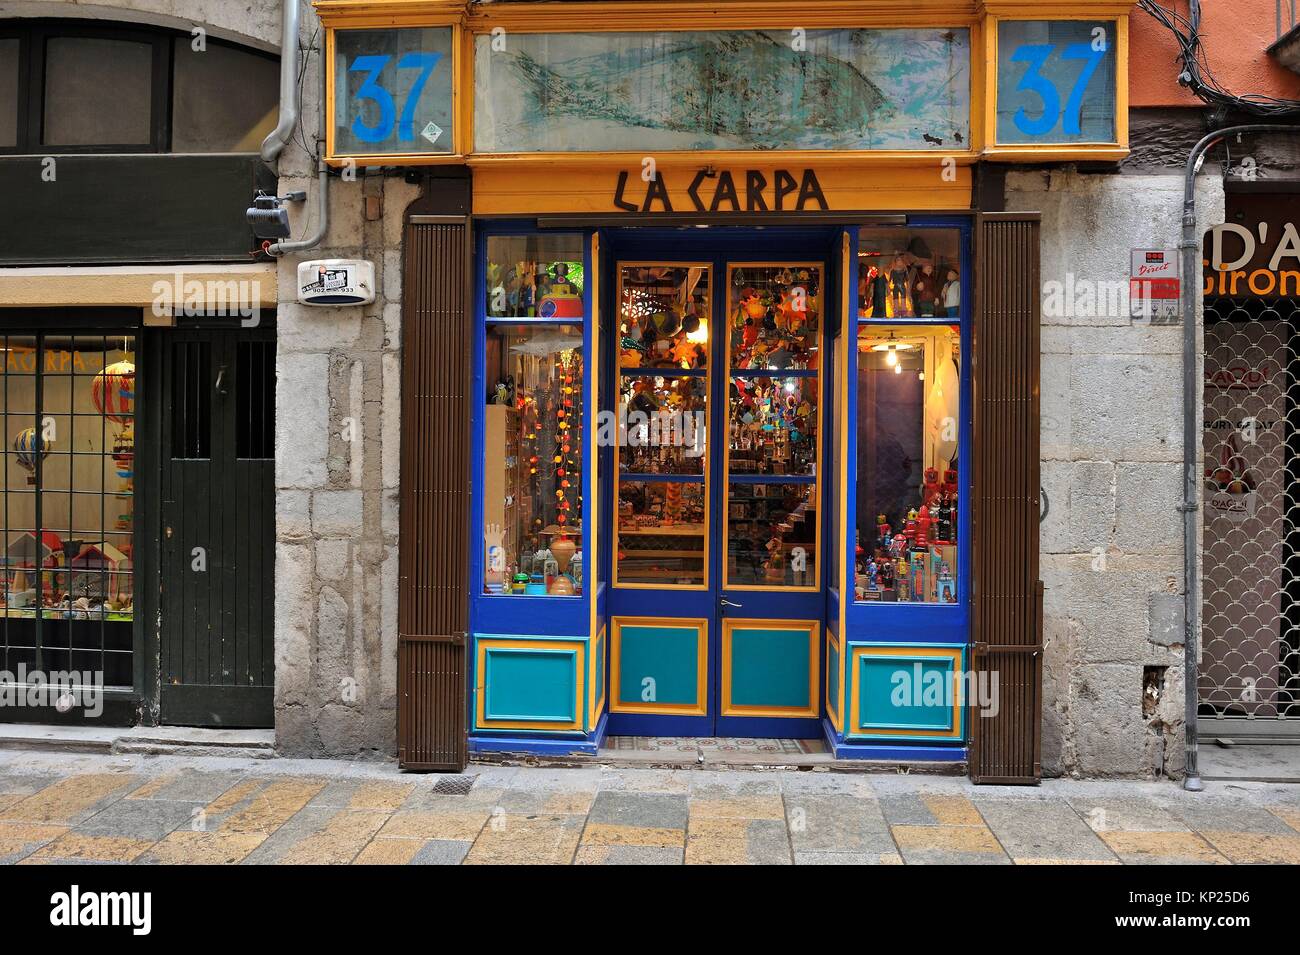 toy store La Carpa in Ballesteries Street, Girona, Catalonia, Spain, Europe  Stock Photo - Alamy